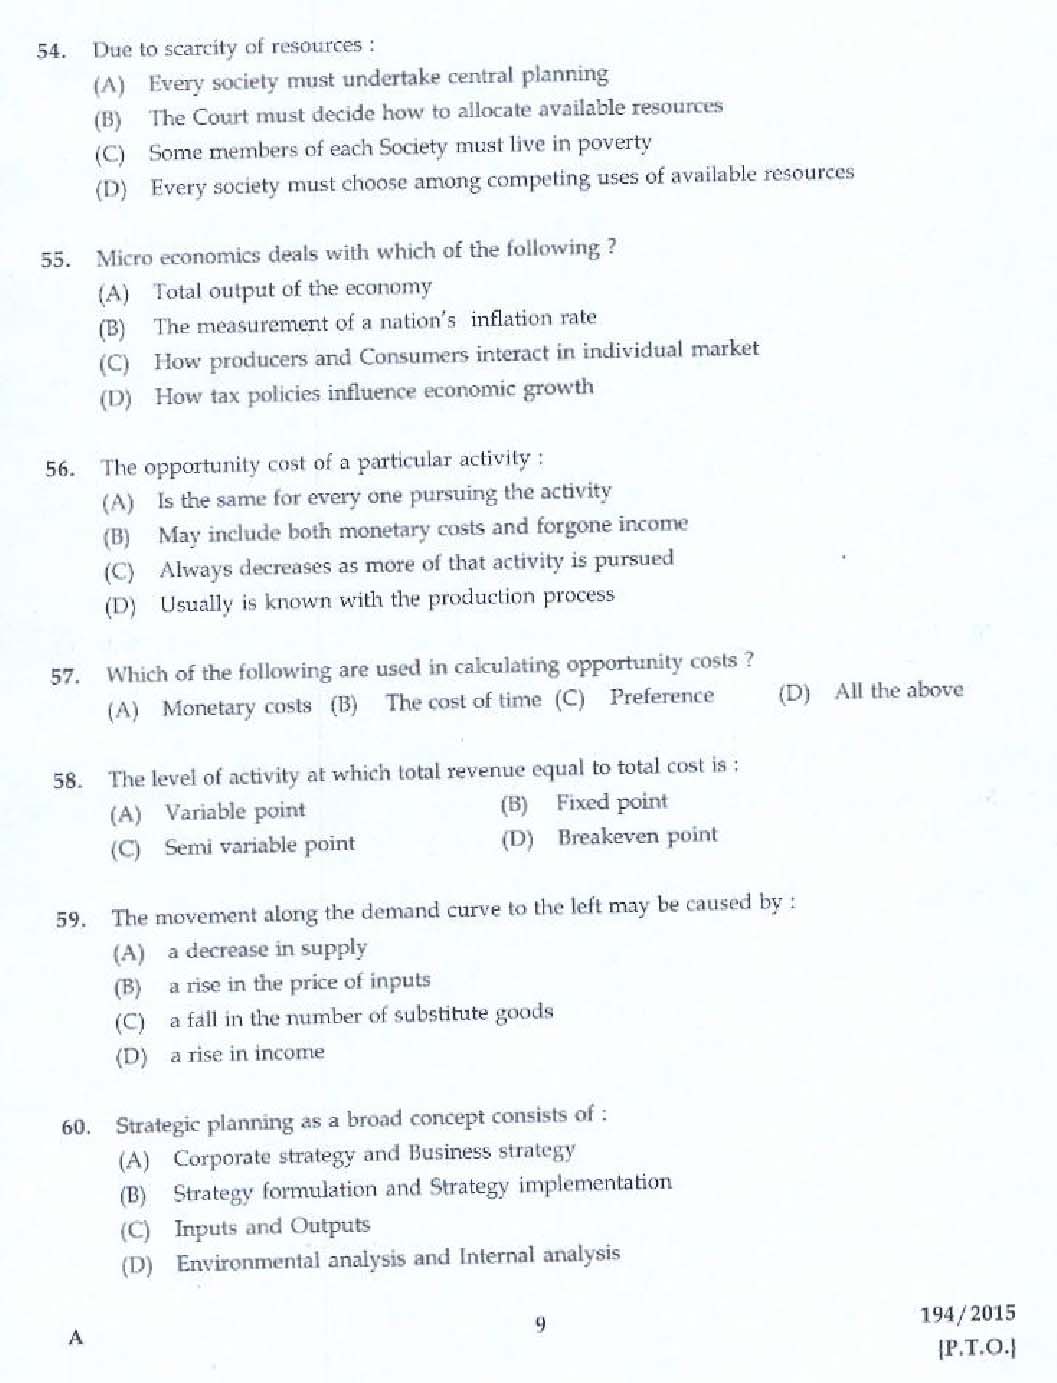 Kerala PSC Store Keeper Exam Question Code 1942015 5